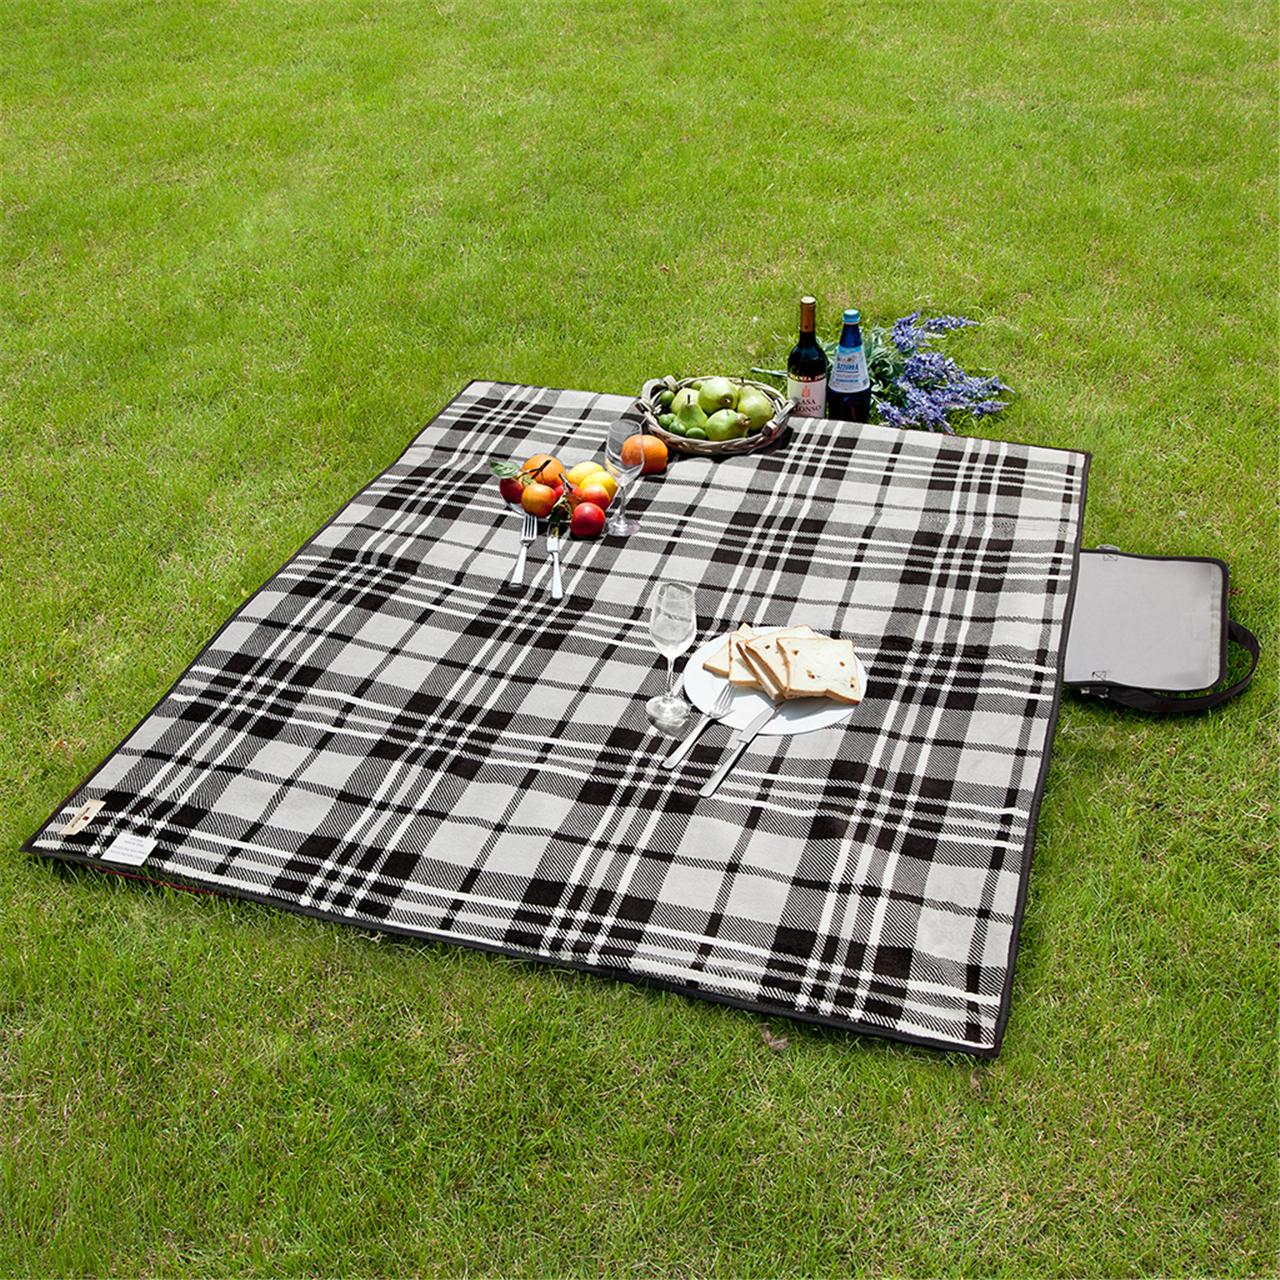 woolrich picnic blanket